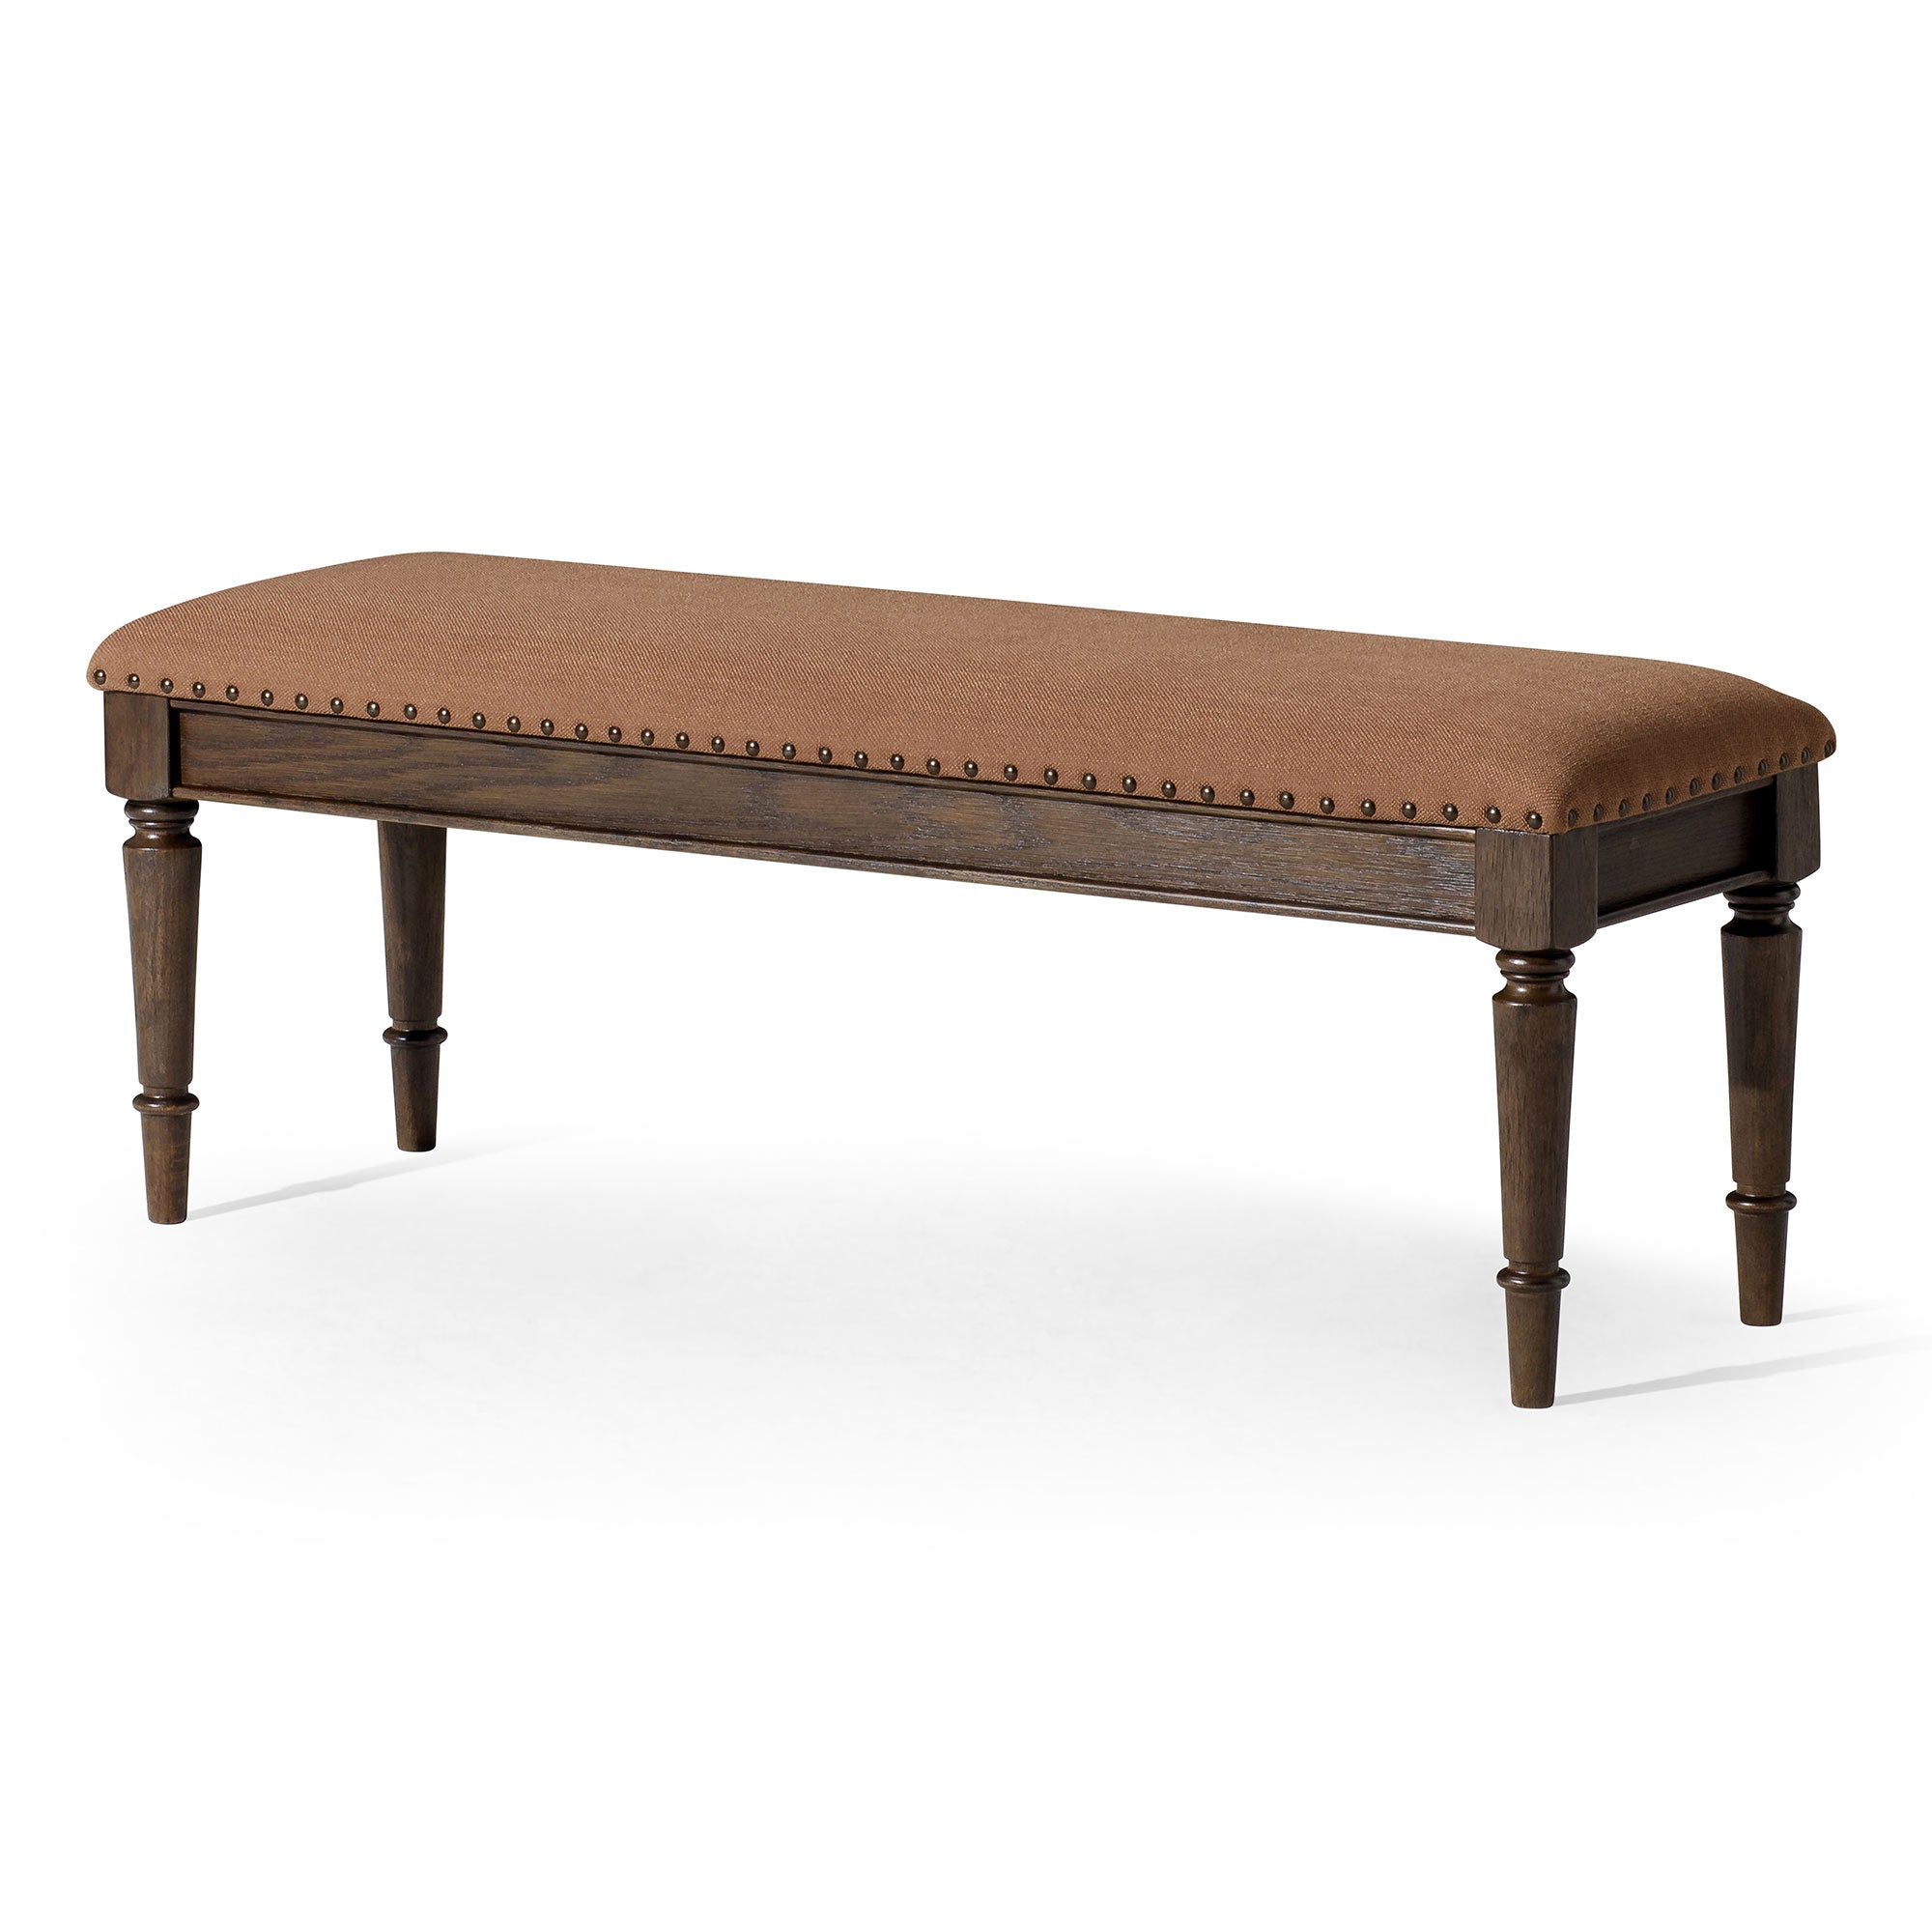 Elizabeth Traditional Upholstered Wooden Bench, Antiqued Brown Finish